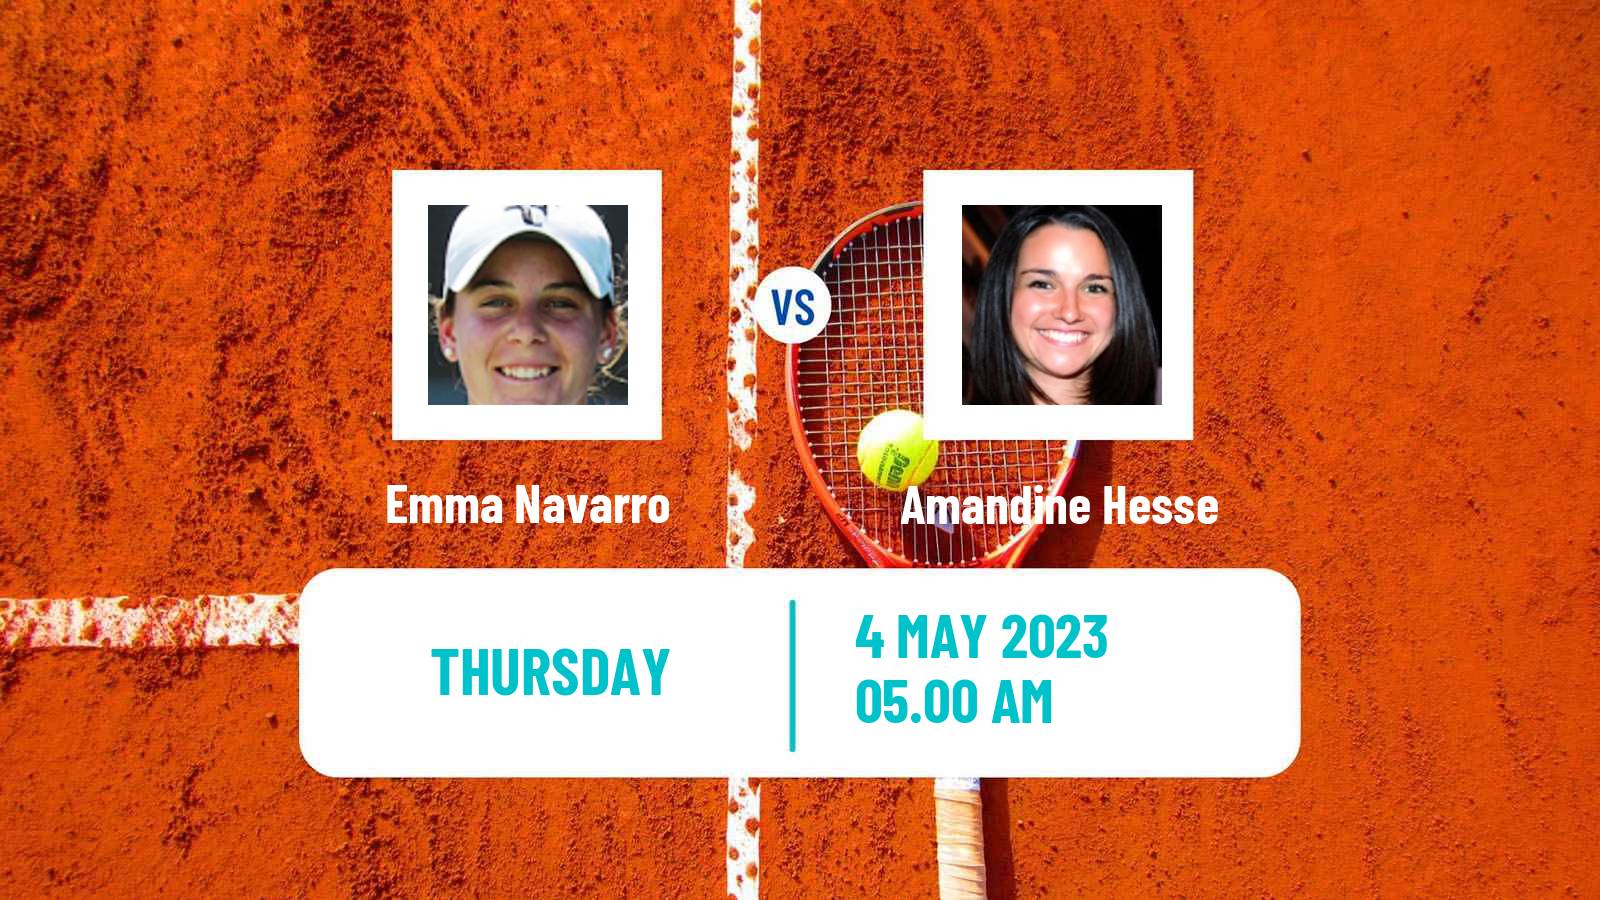 Tennis ATP Challenger Emma Navarro - Amandine Hesse